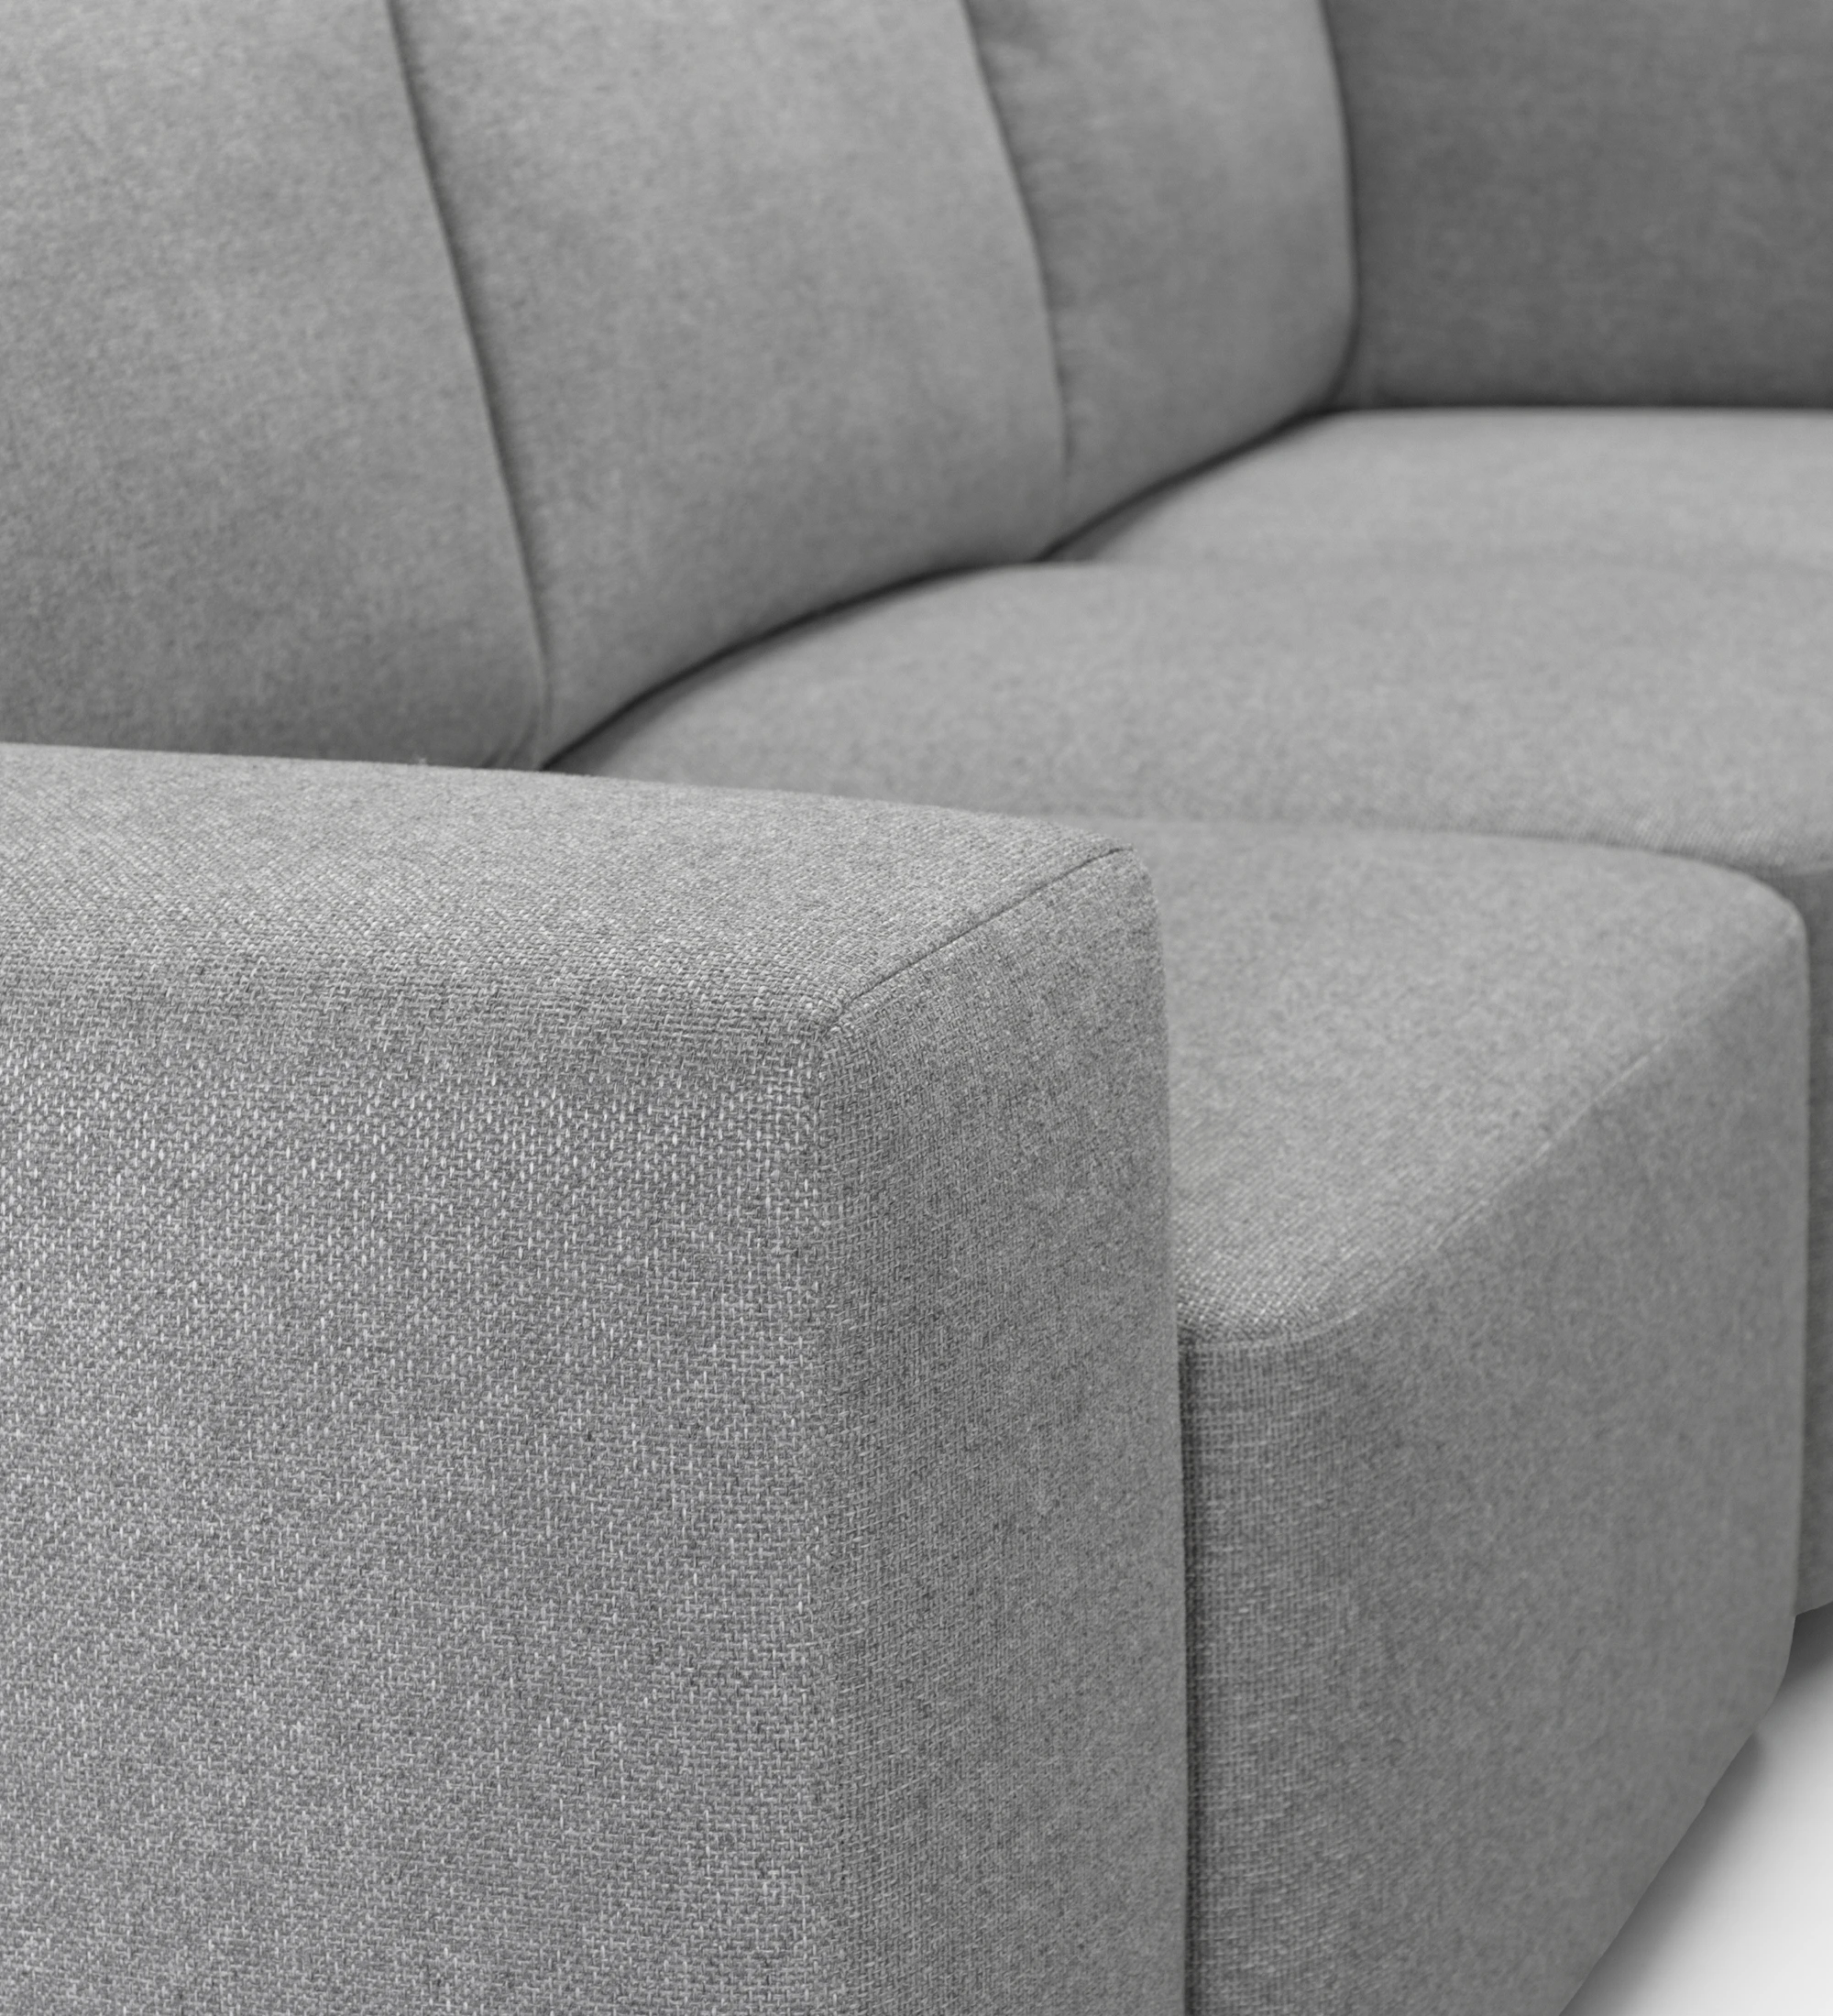 Paris corner sofa 2+1 seats, upholstered in gray fabric, 292 x 214 cm.